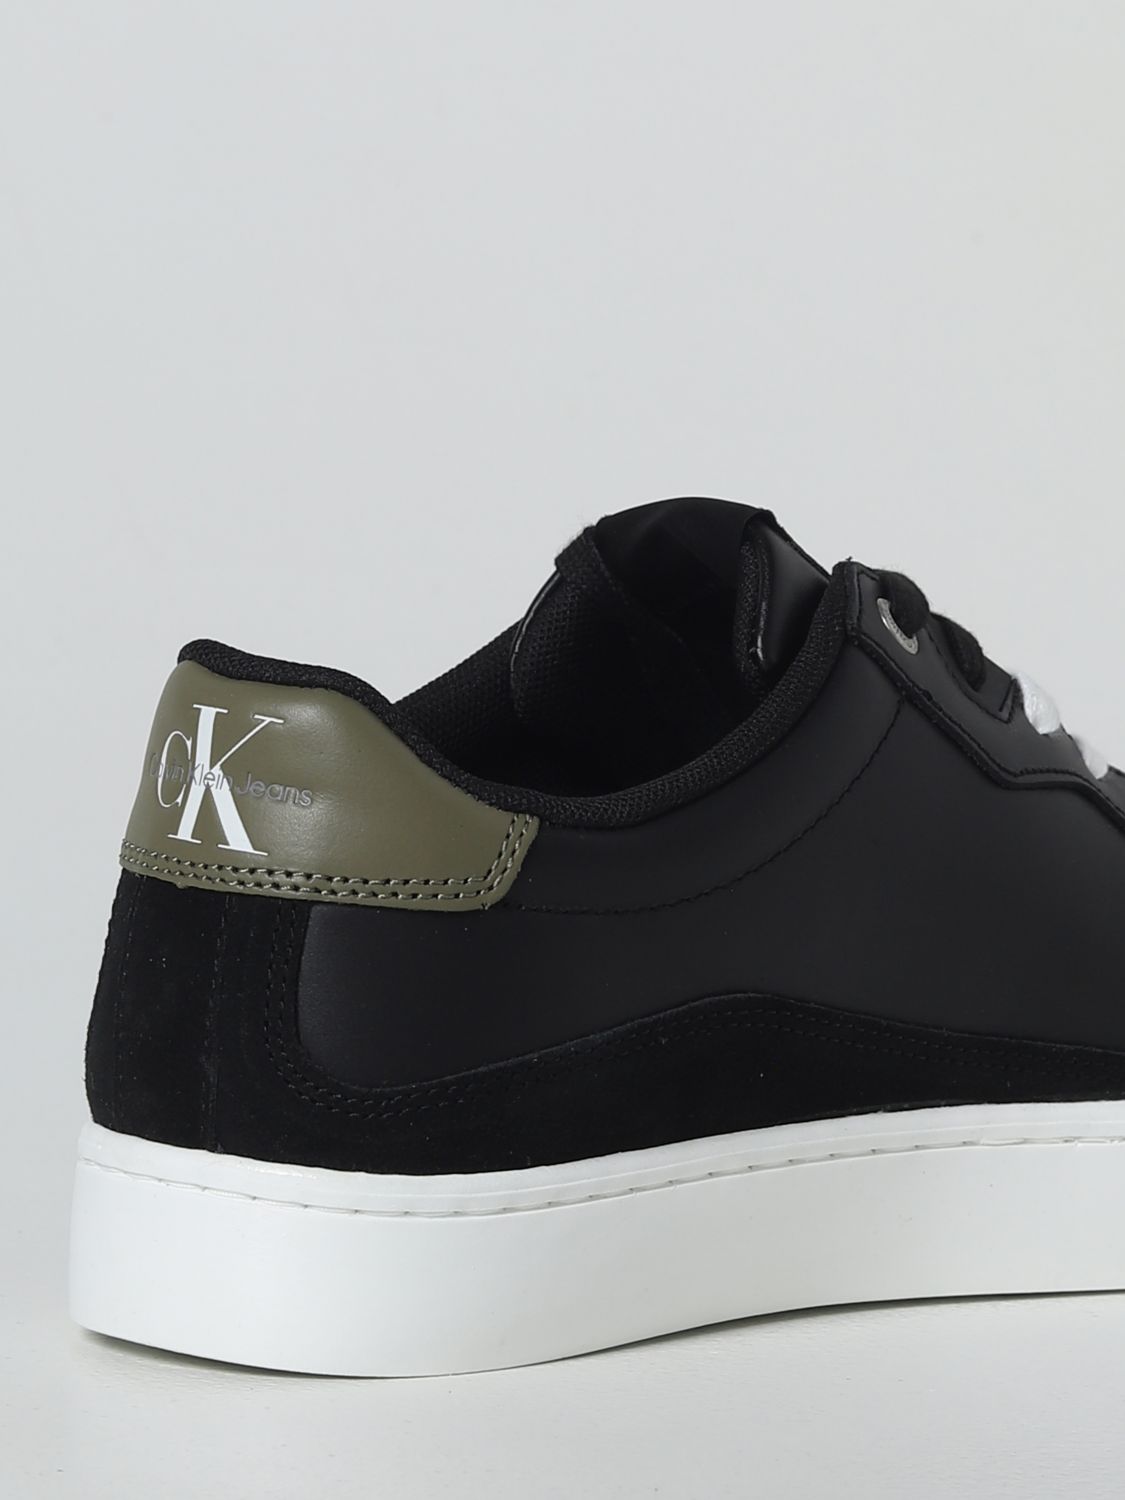 CALVIN JEANS: leather sneakers - Black | Calvin Klein Jeans sneakers YM0YM00432 online on